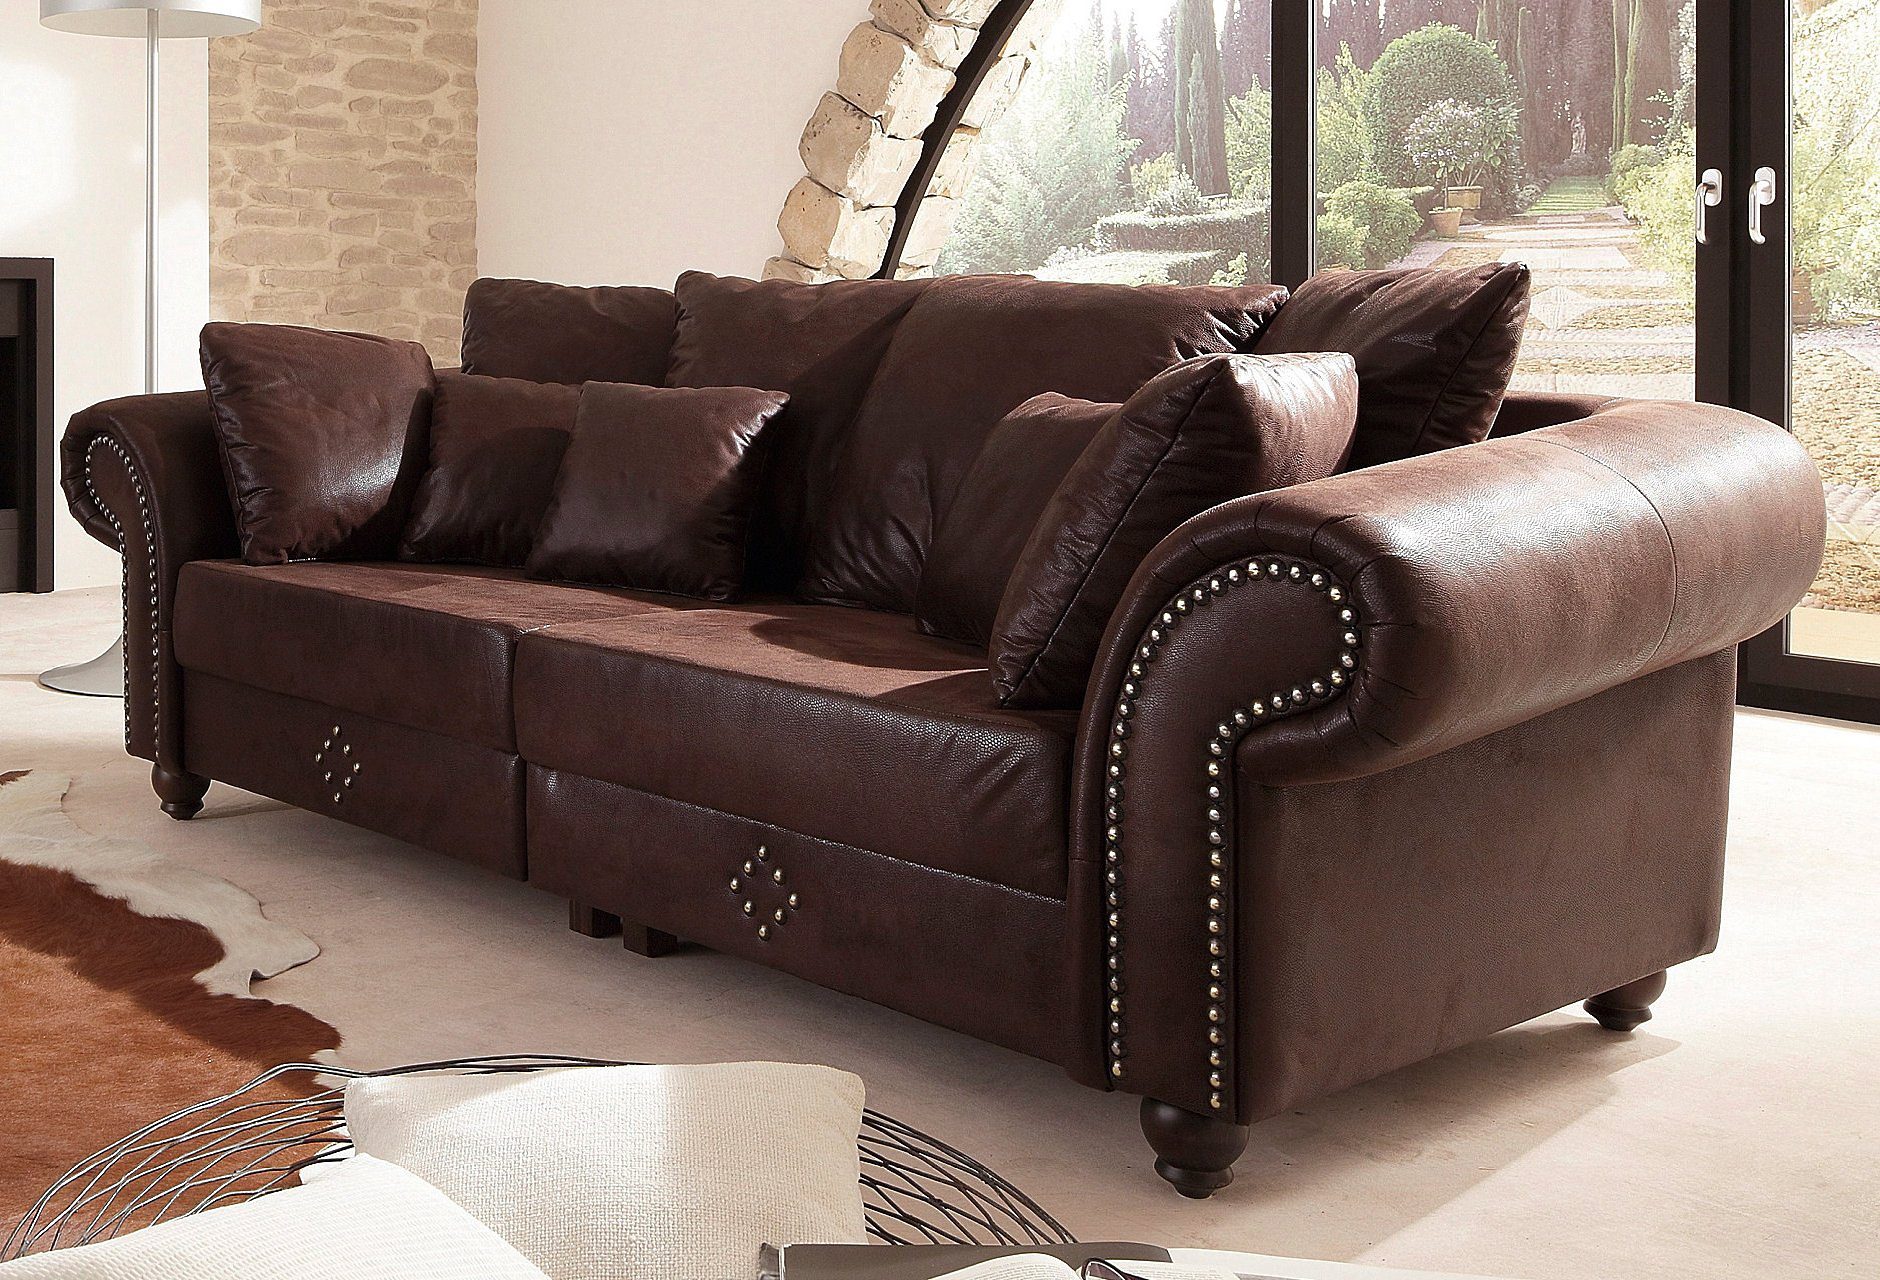 Home affaire Big-Sofa »King George« online kaufen | OTTO